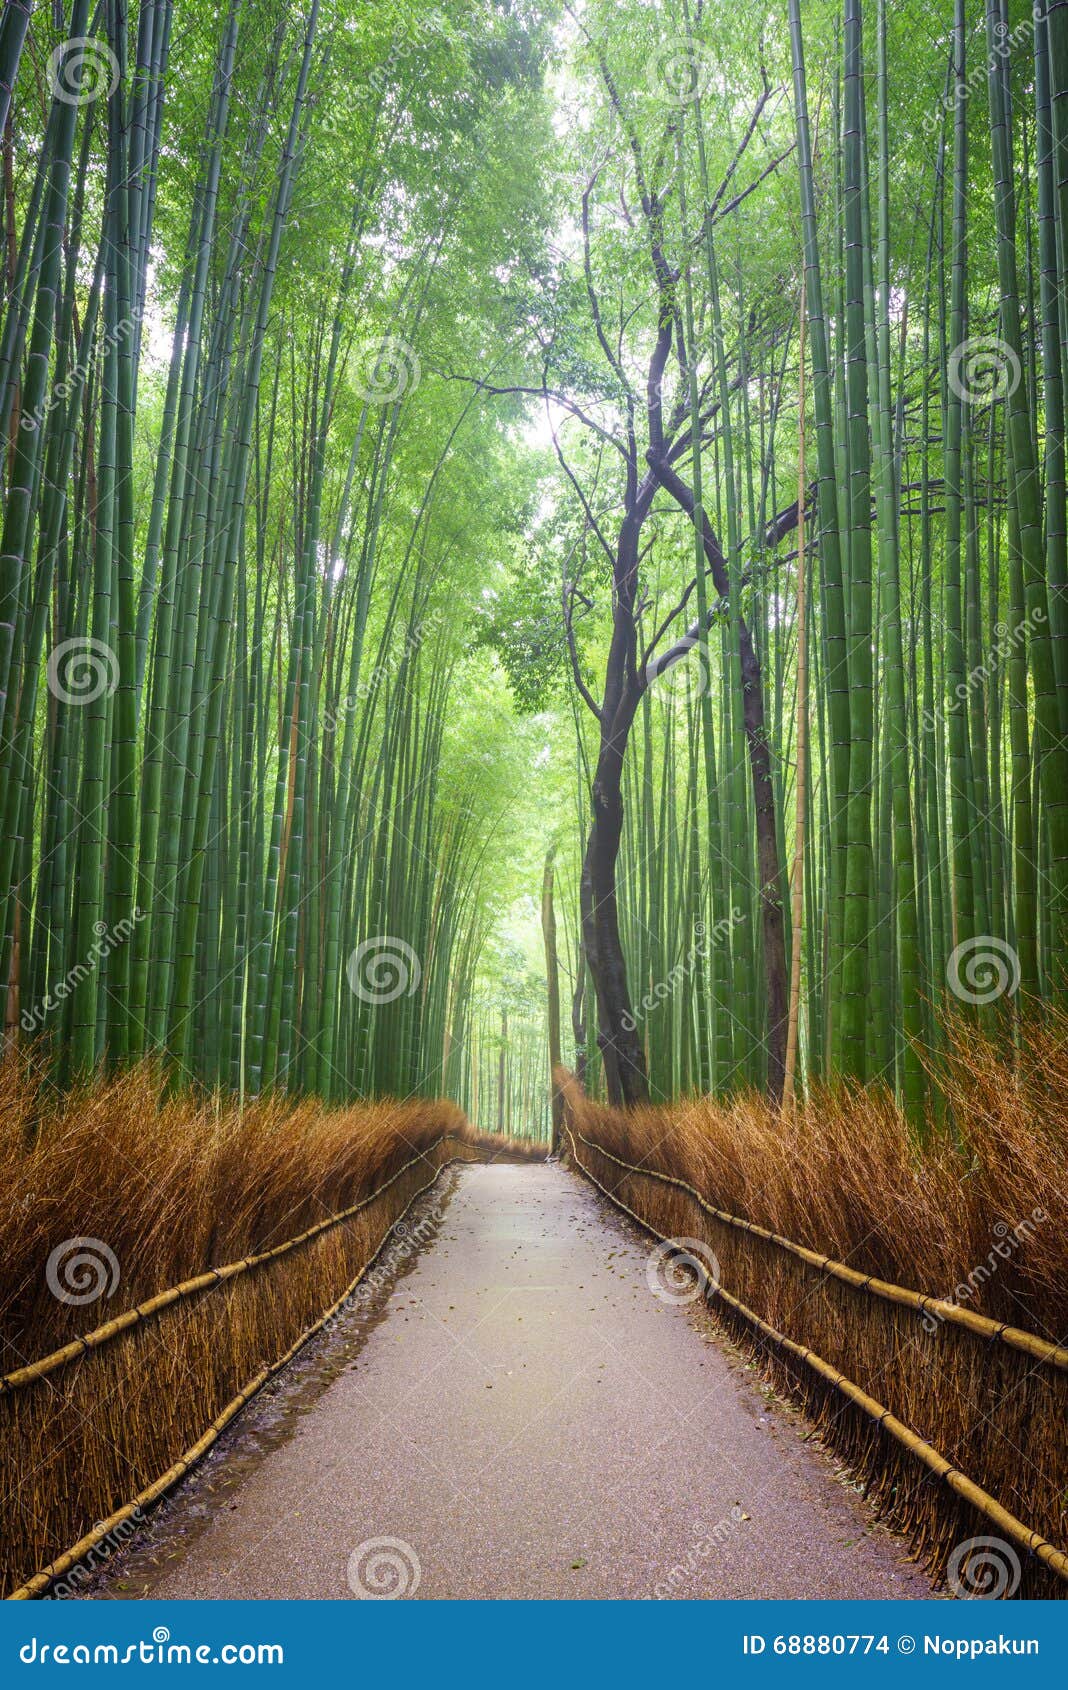 path to bamboo forest, arashiyama, kyoto, japan